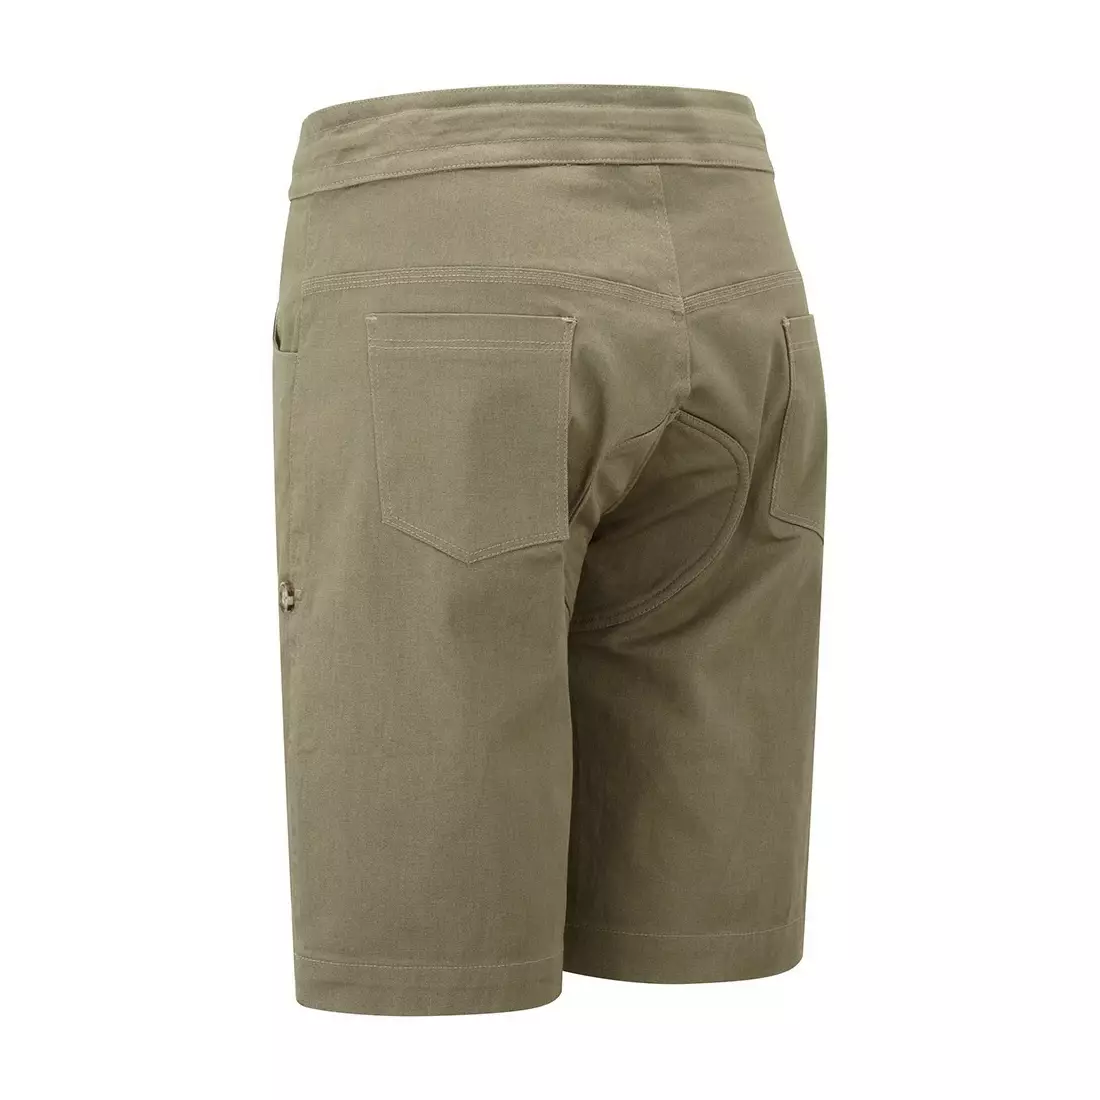 TENN OUTDOORS Damen CARGO-Shorts, Farbe: Khaki